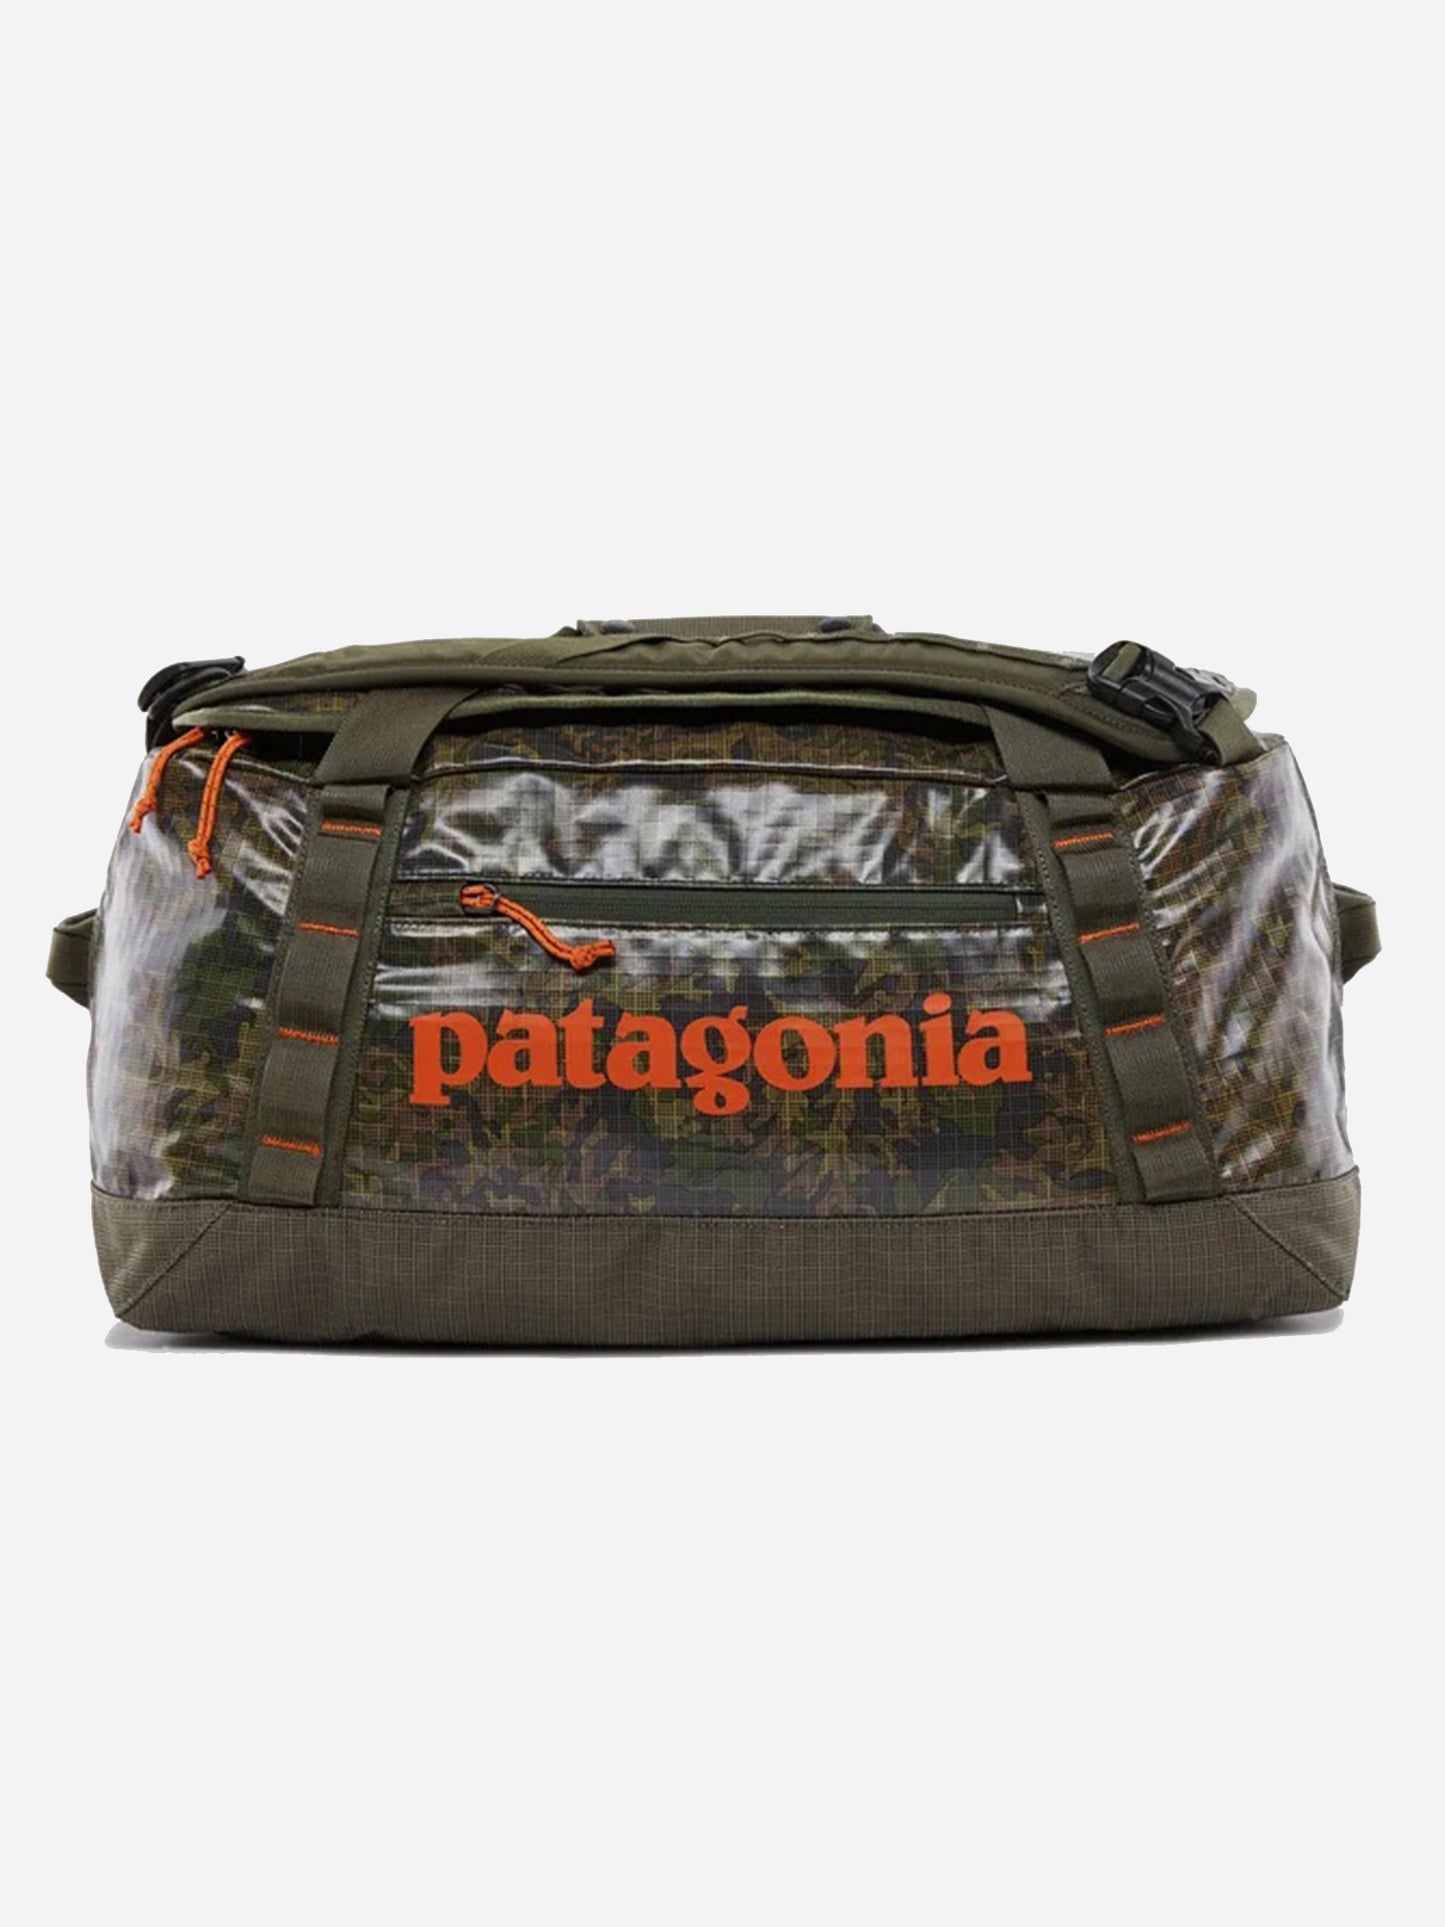 Patagonia Black Hole Duffle Bag 40L